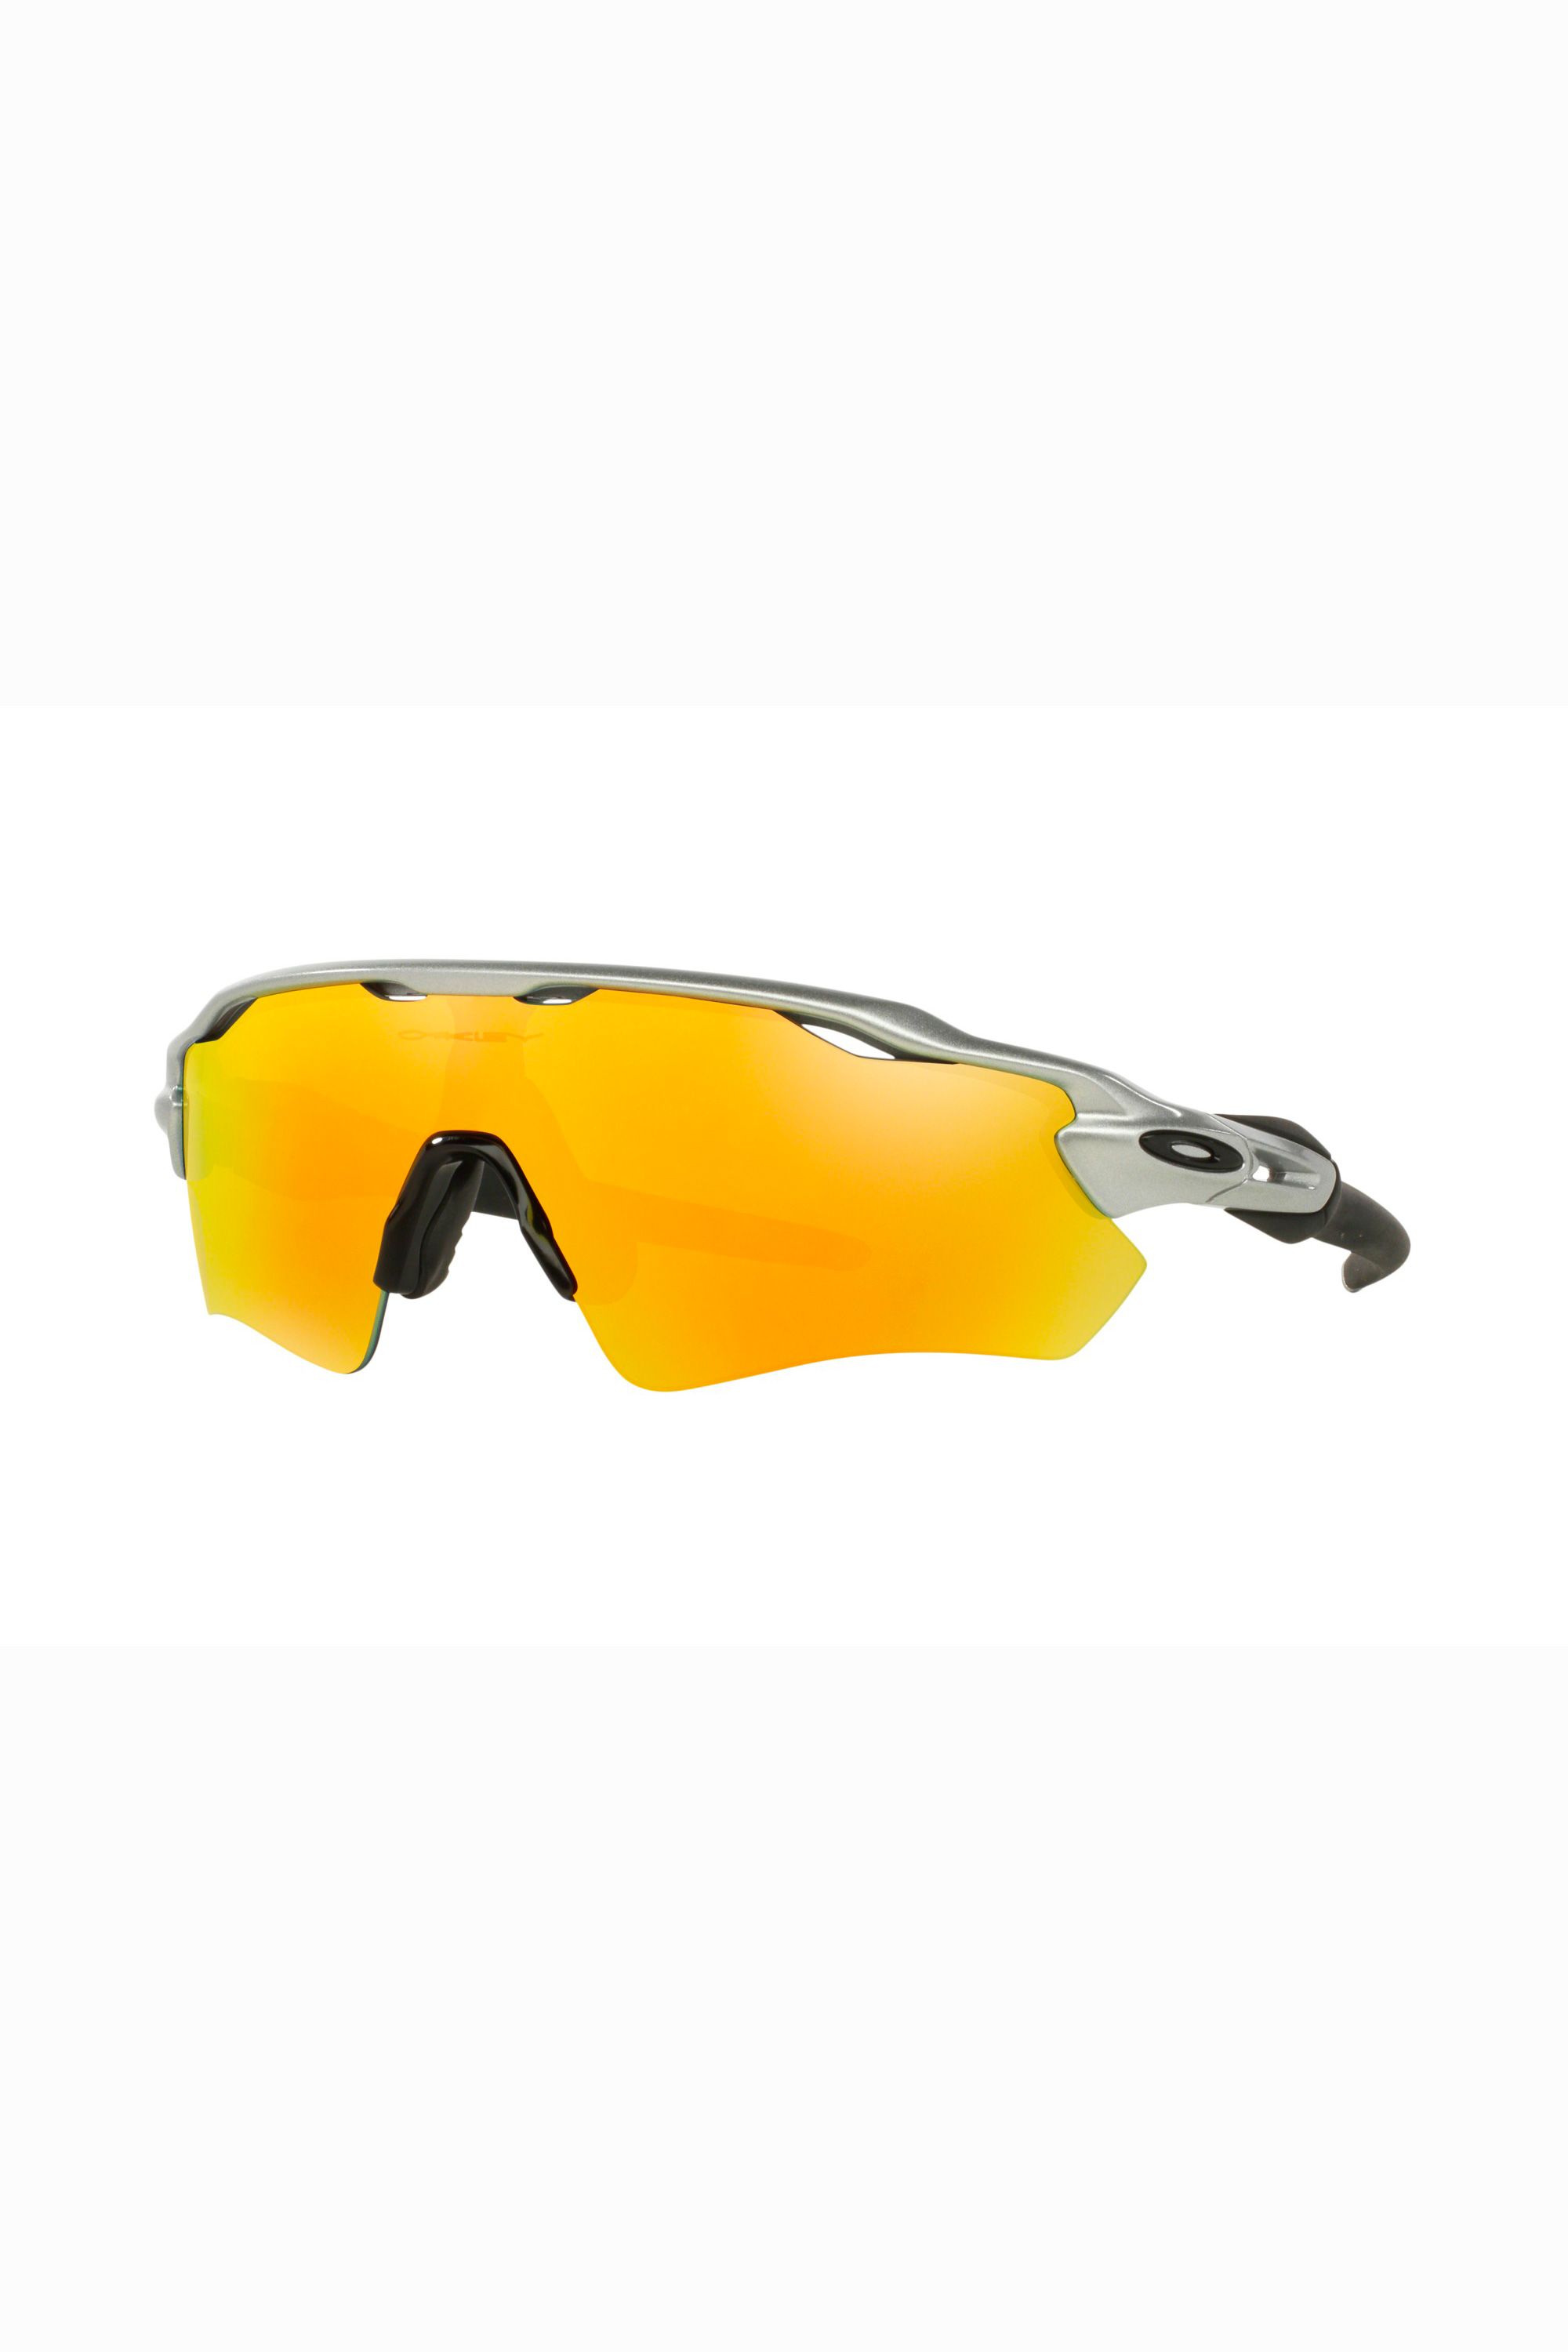 Deporte gafas de sol ciclismo gafas motorista gafas Ski Snowboard caballeros 755 